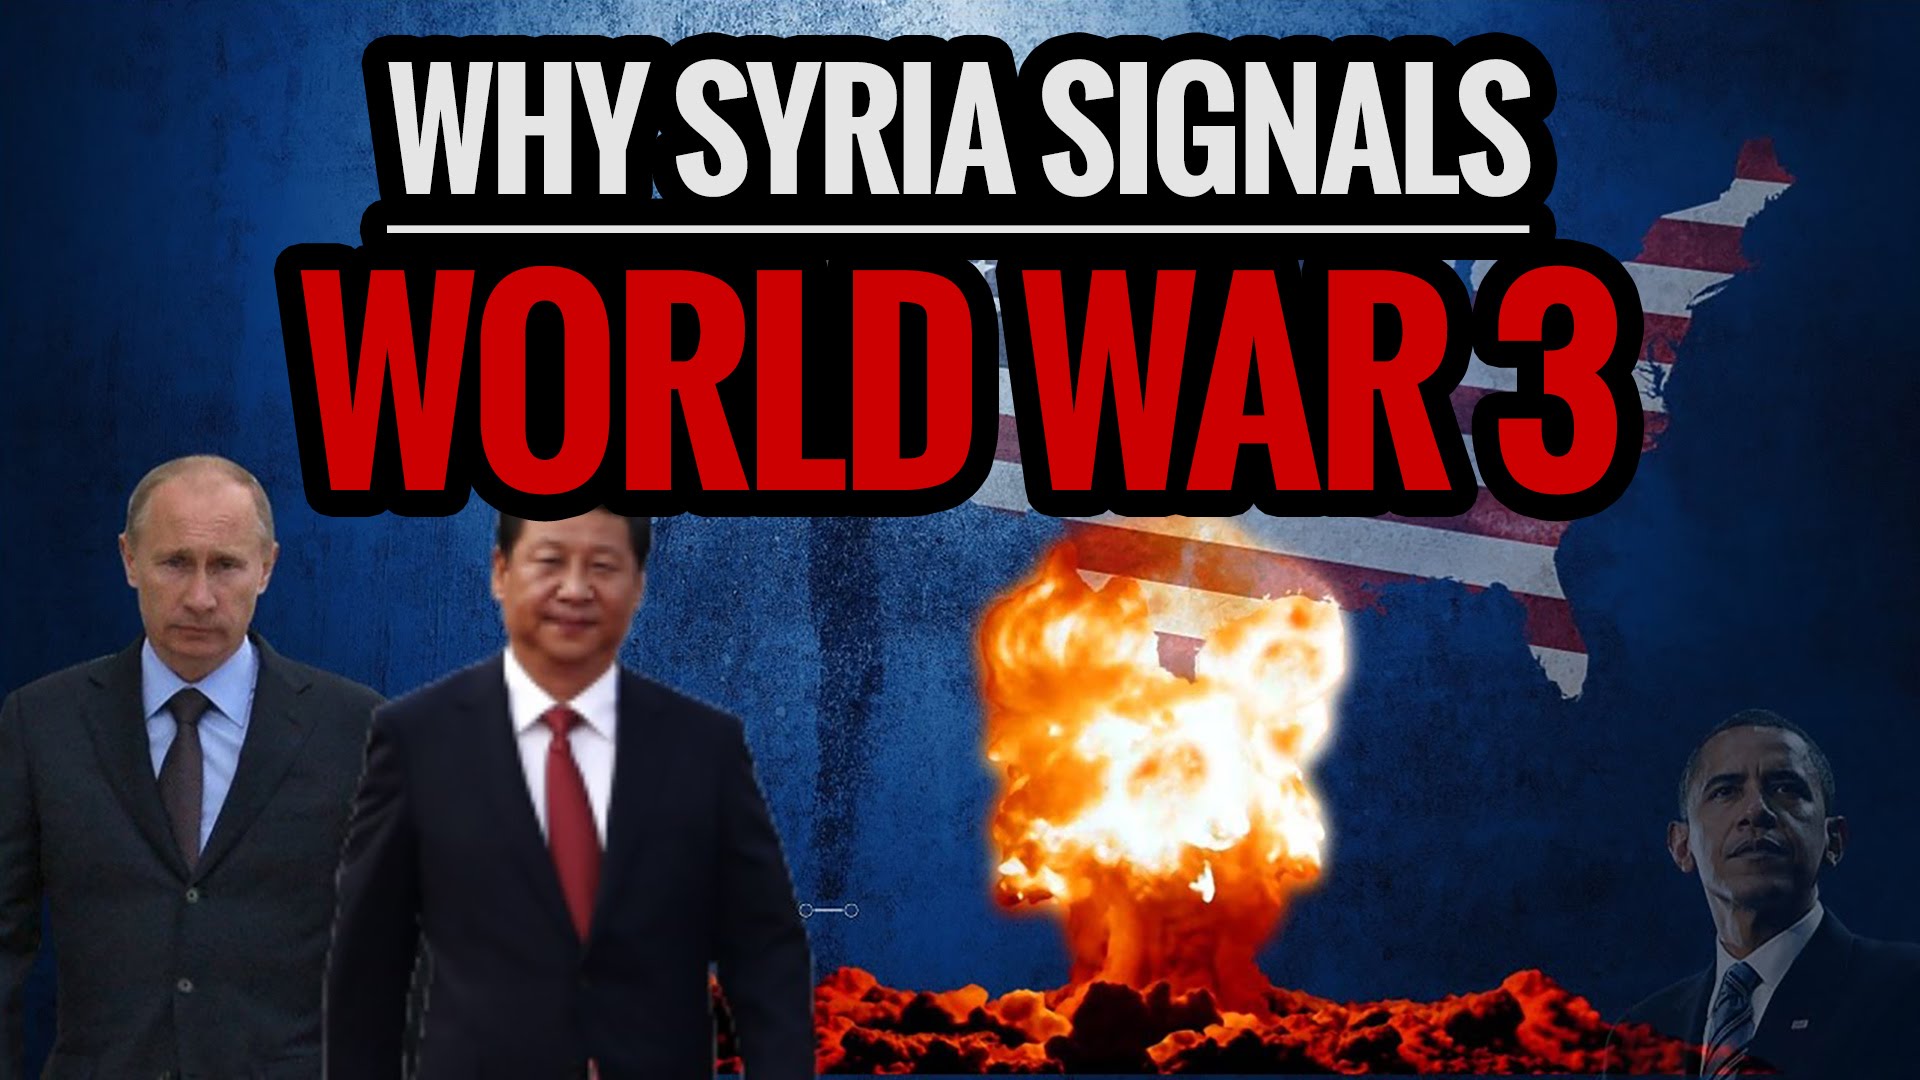 Why Syria Signals World War 3